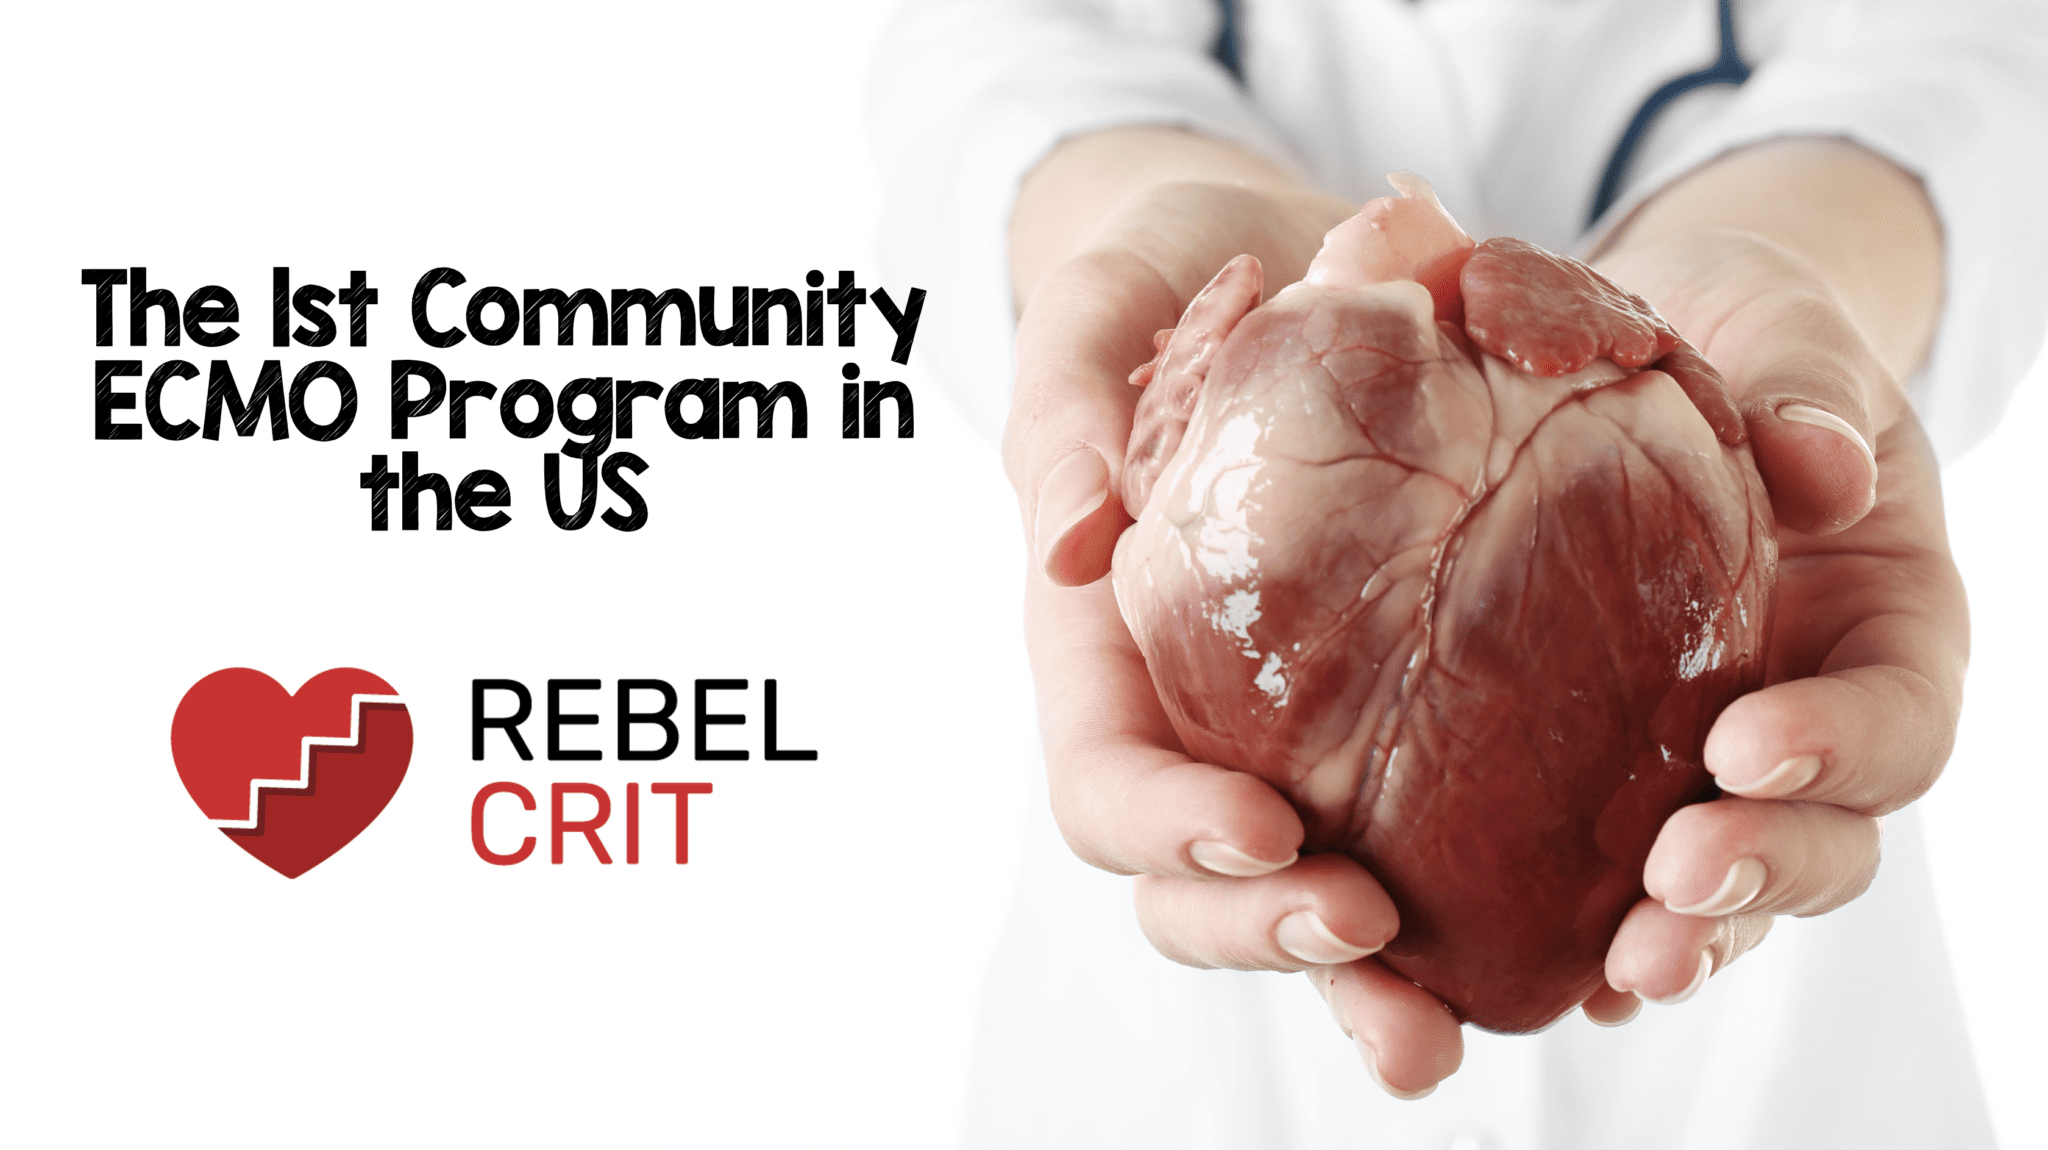 The 1st Community ECMO Program in the US REBEL EM Emergency